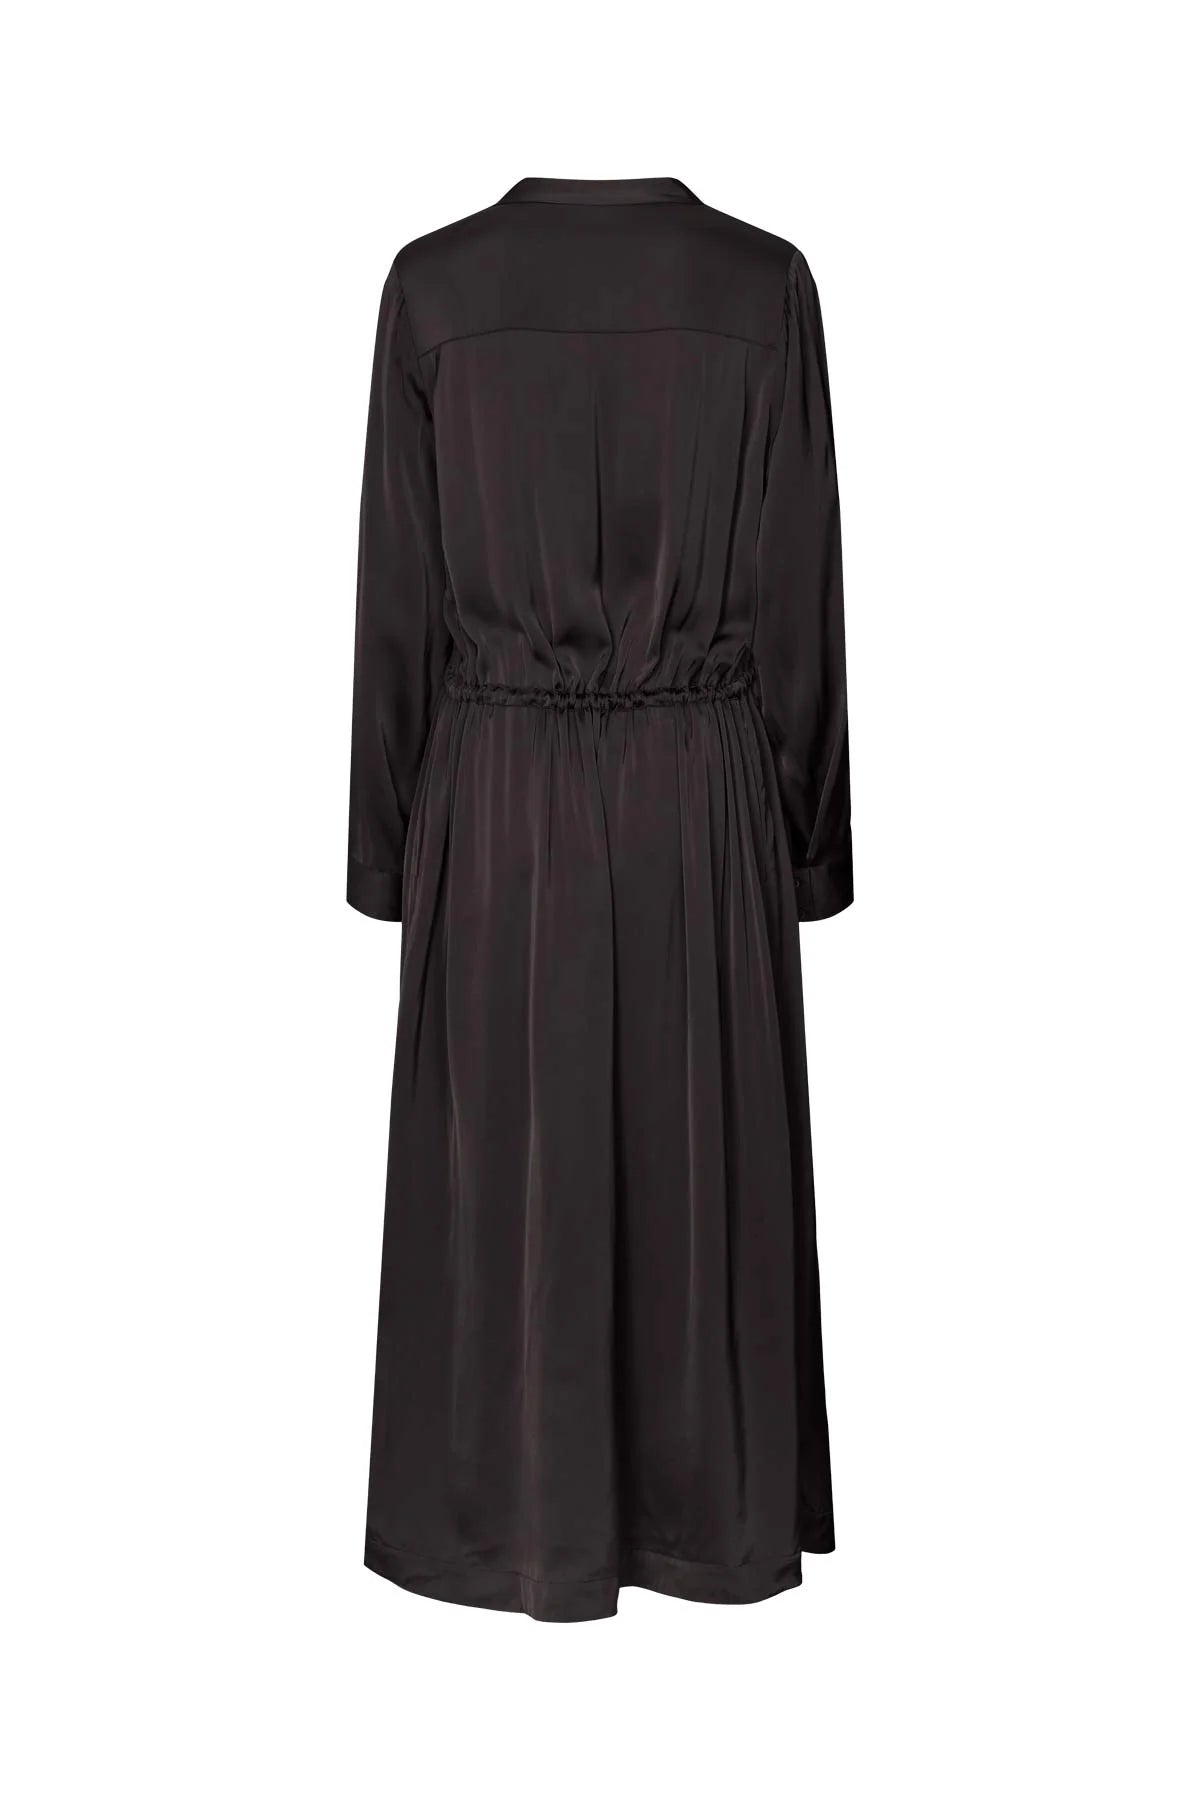 Rabens Saloner - Pim Dress - Black